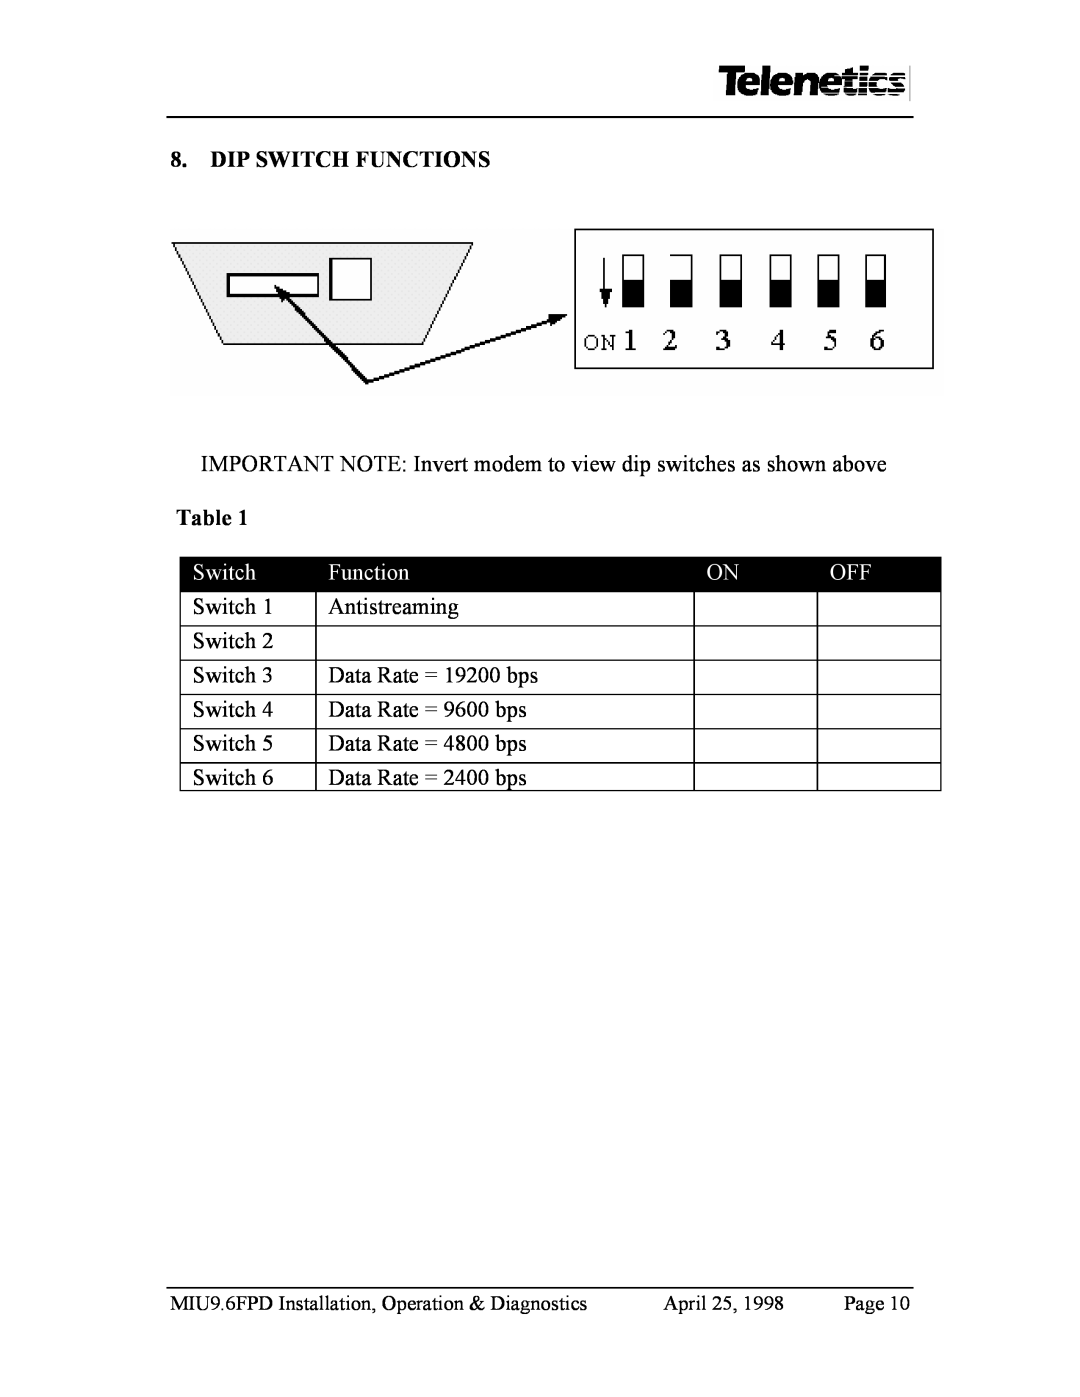 Telenetics MIU9.6FPD manual Dip Switch Functions 